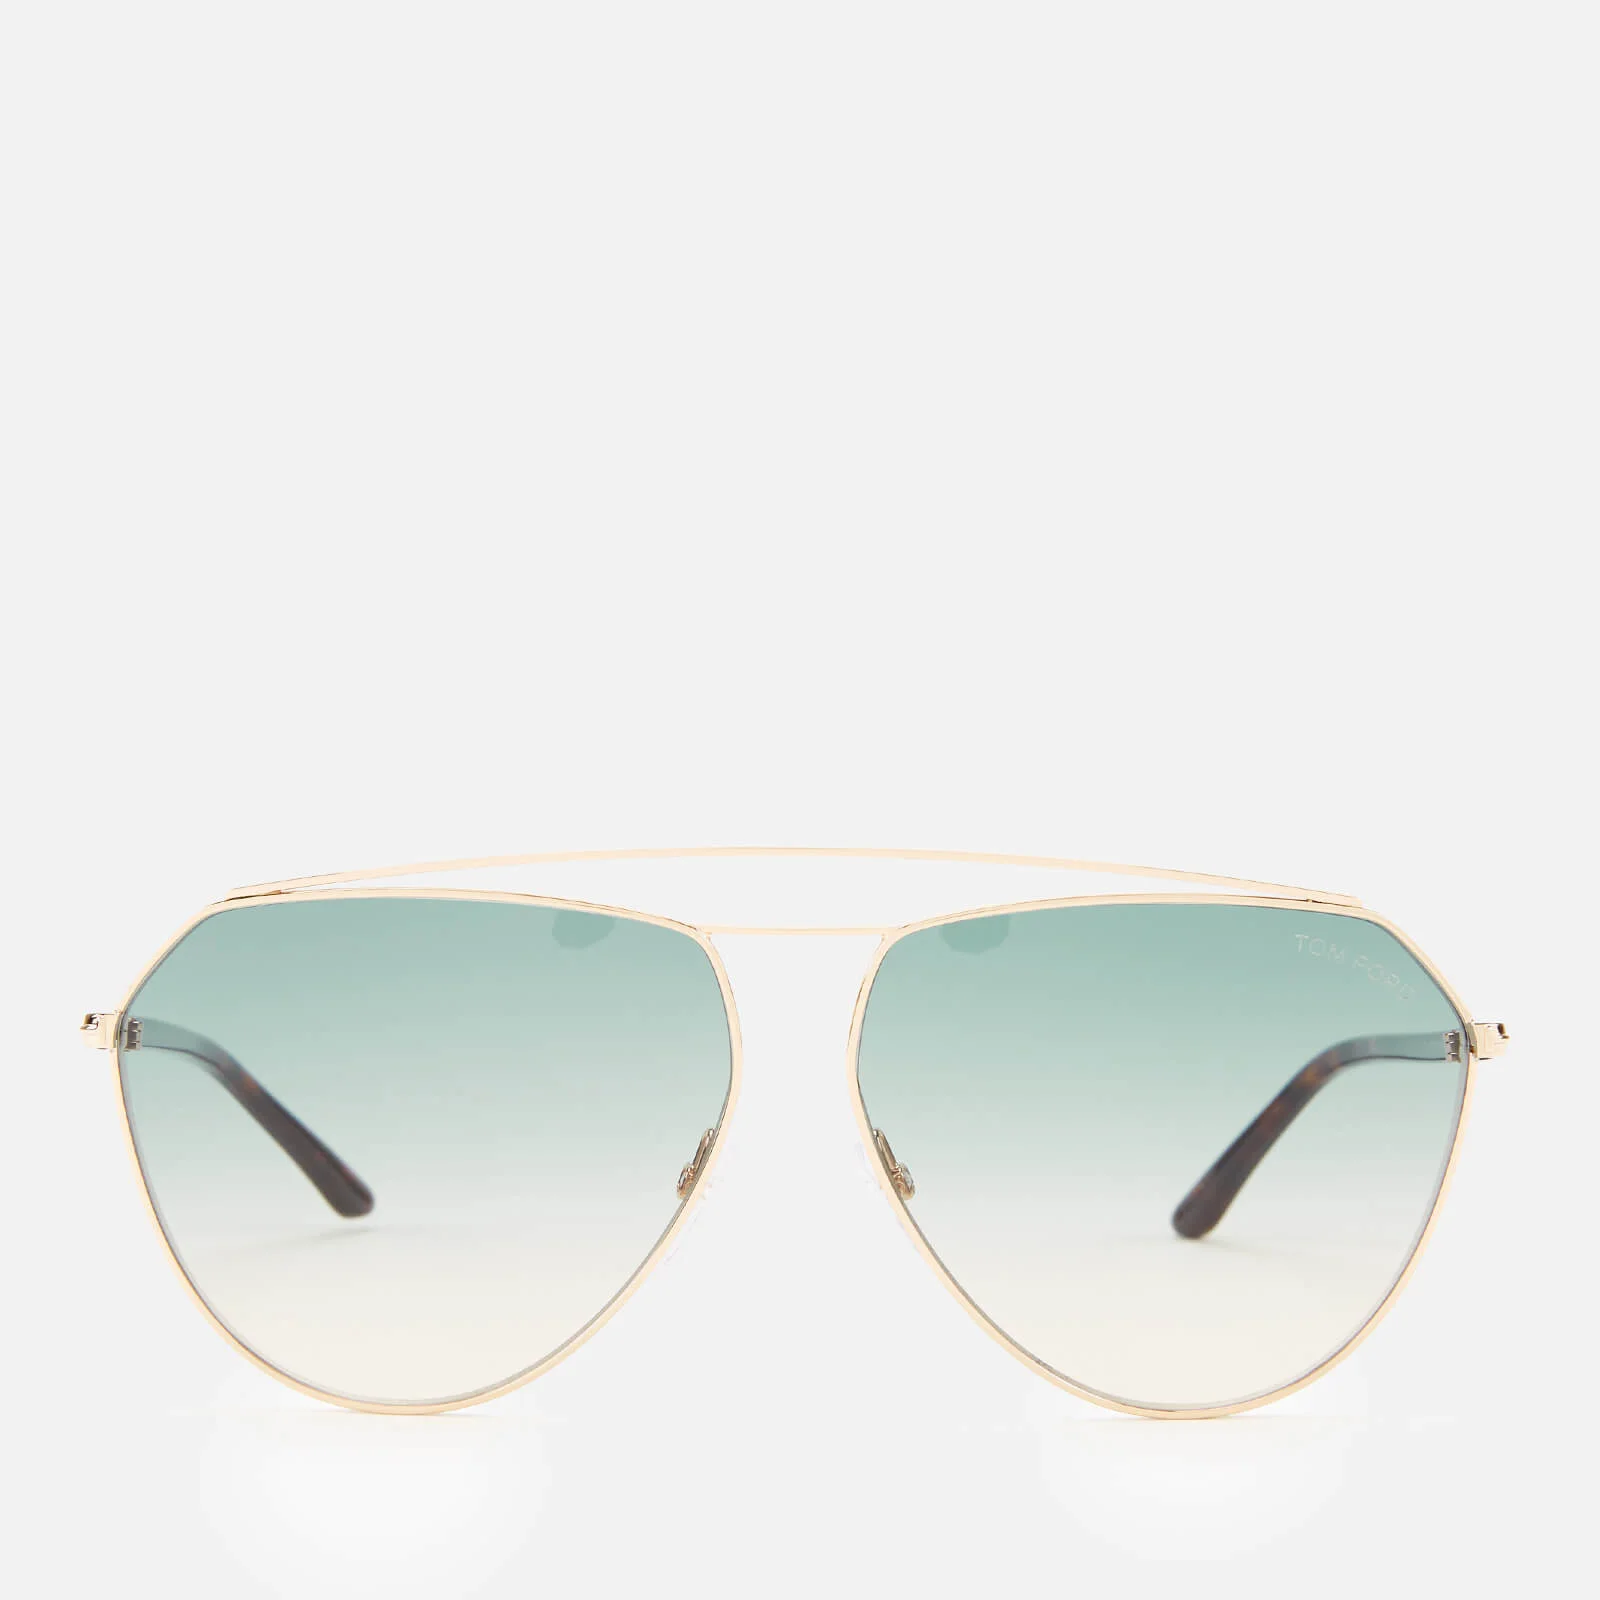 Tom Ford Women's Binx Sunglasses - Shiny Rose Gold/Gradient Green Image 1